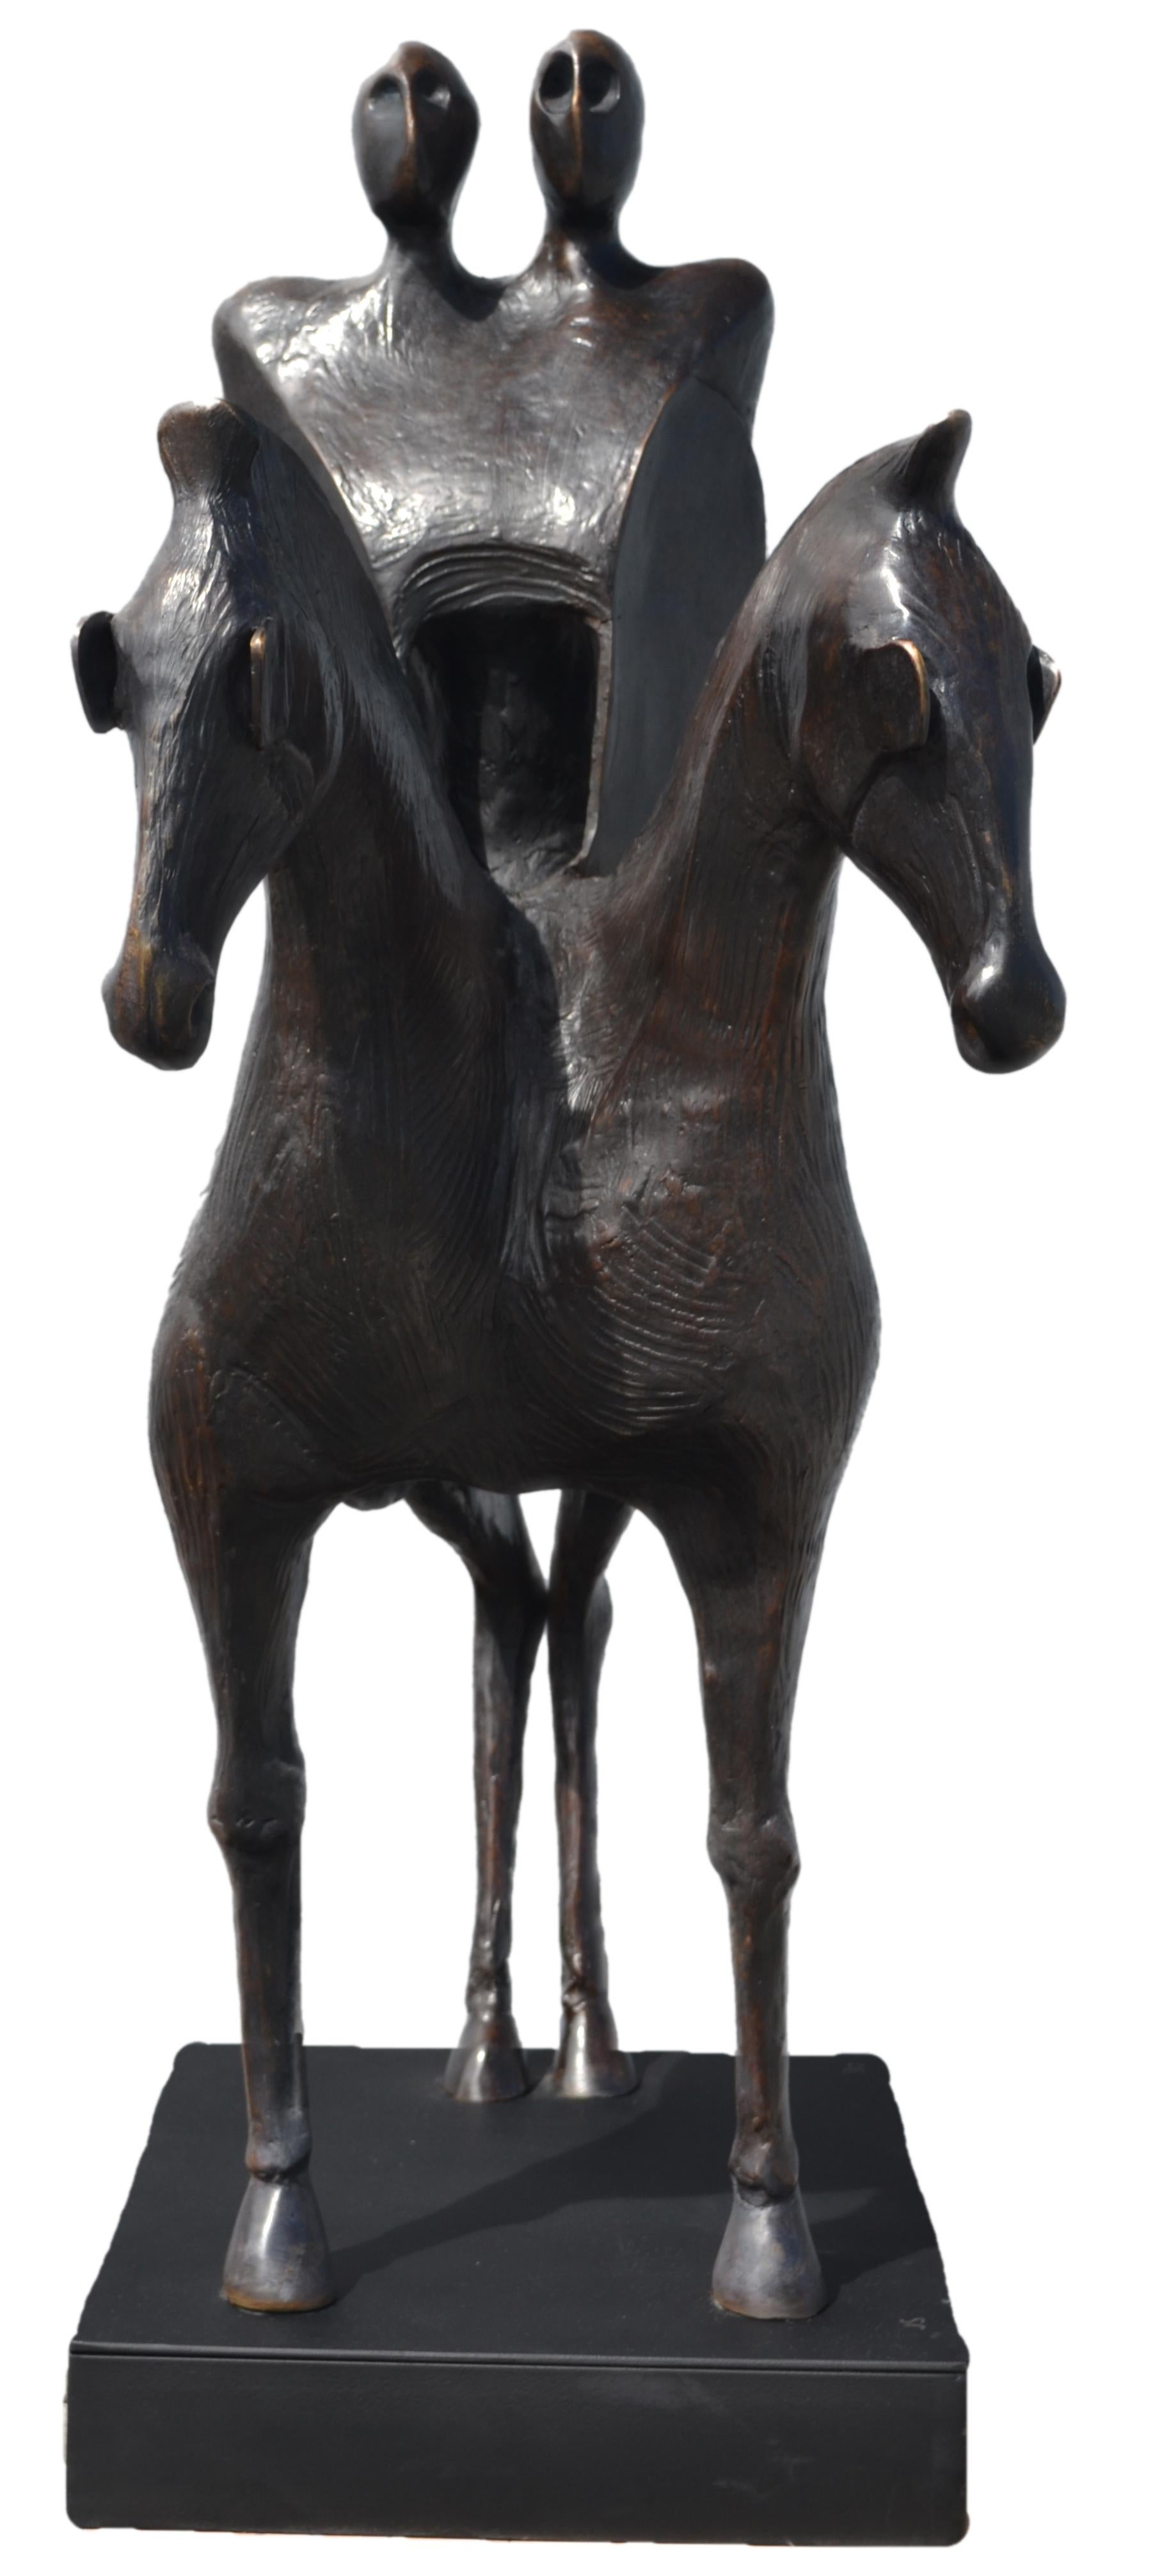 Jorge Seguí  Figurative Sculpture – Jorge Segu, Falsos Heroes en Caballos Mticos, Bronze, Auflage 1/7, 2010-2013